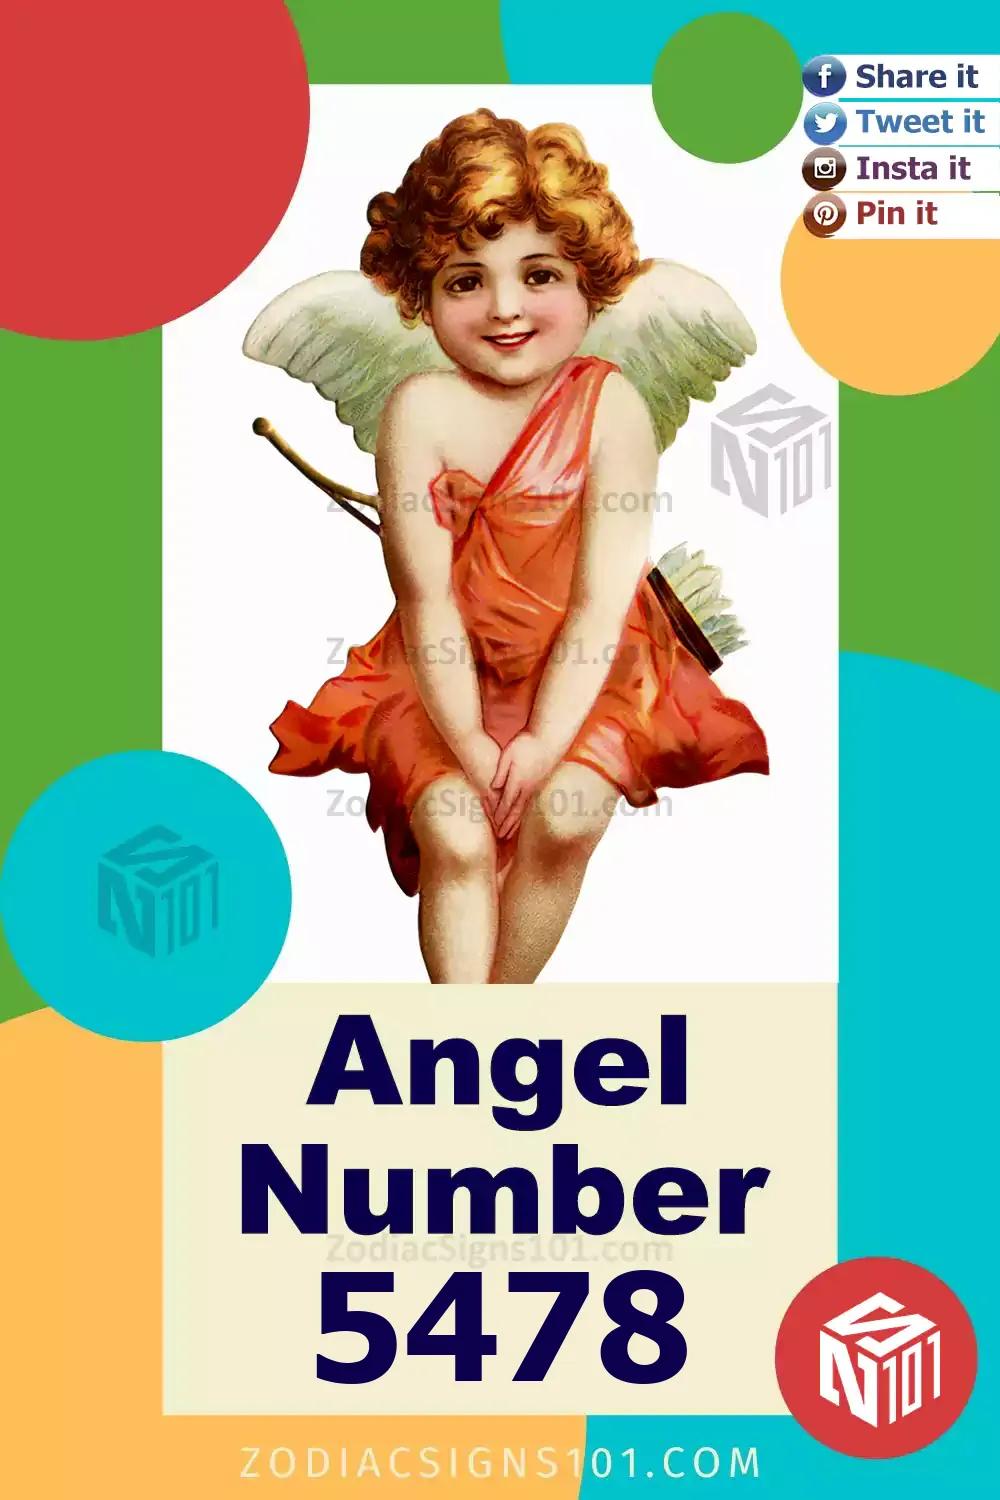 5478-Angel-Number-Meaning.jpg